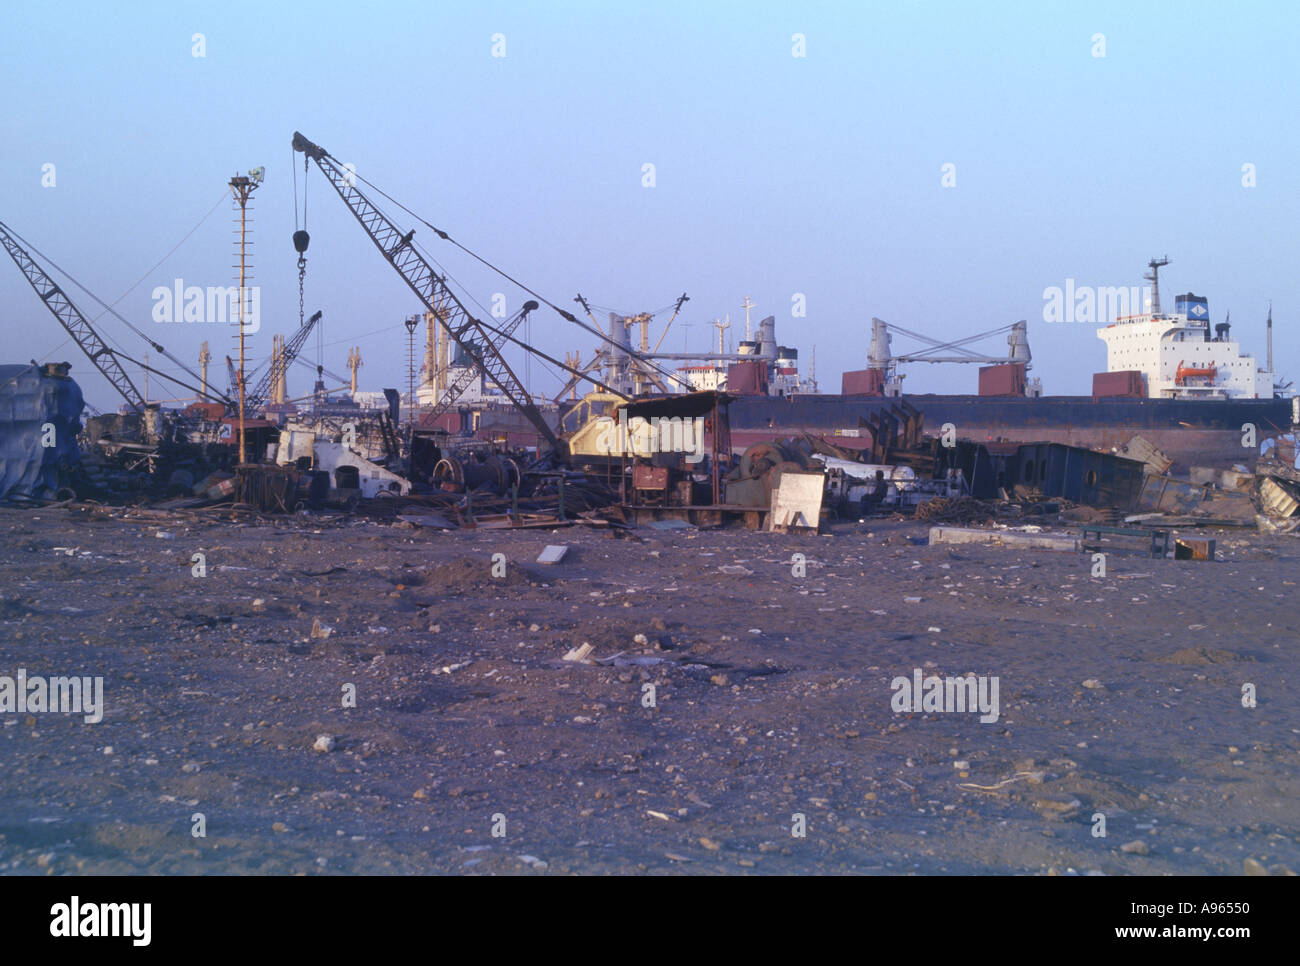 Ship-breaking, Alang Stock Photo